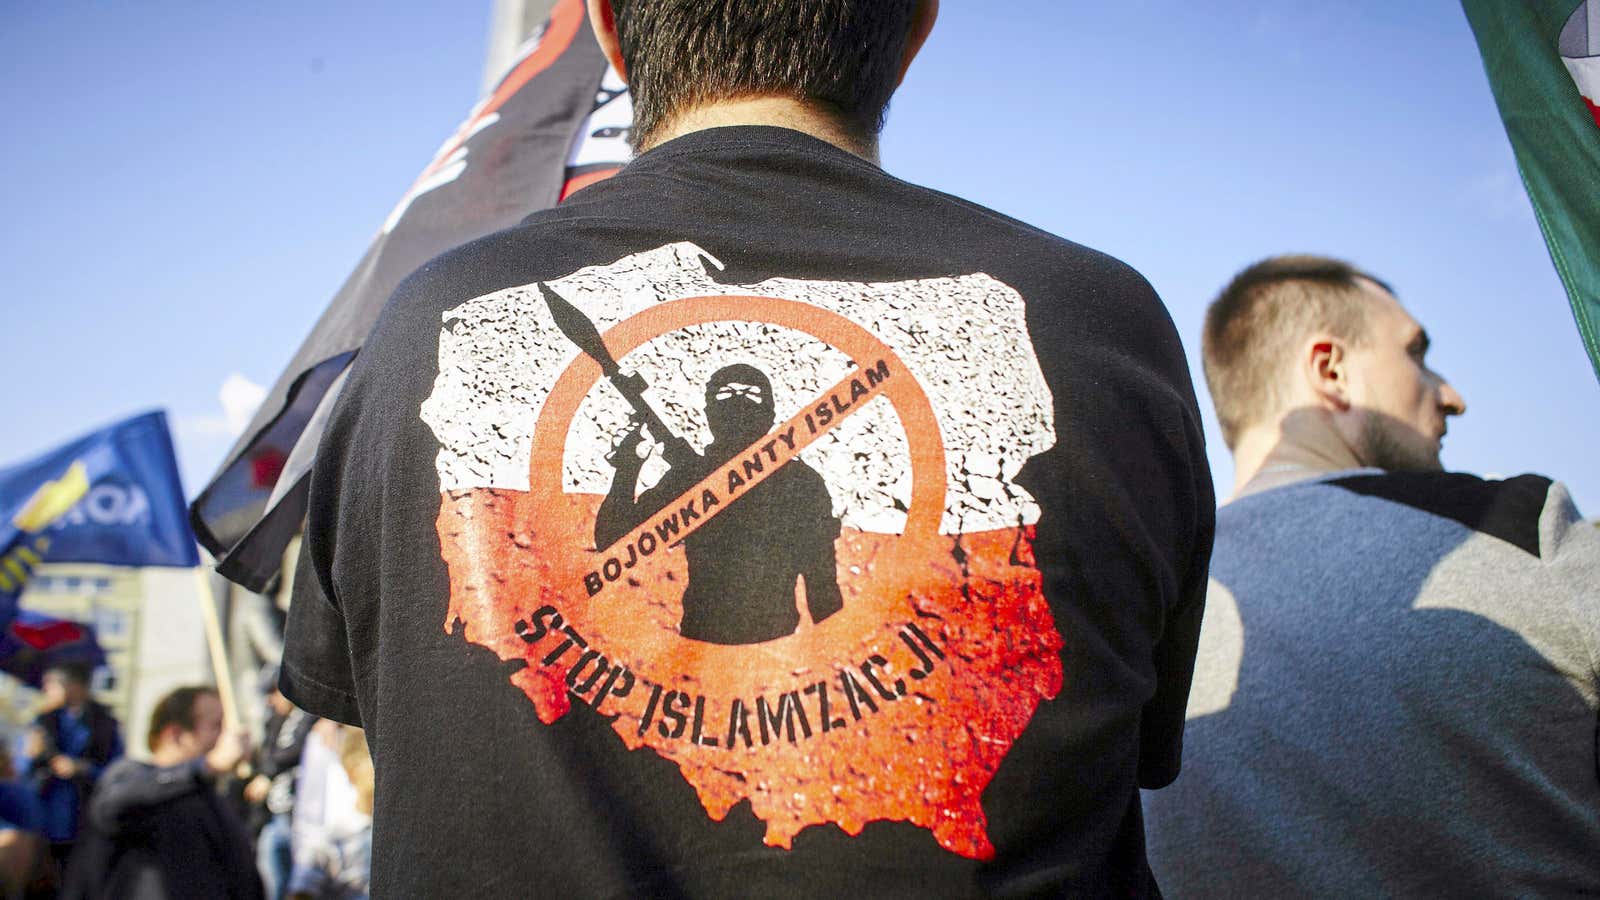 “Stop Islamization.” A far right protest.